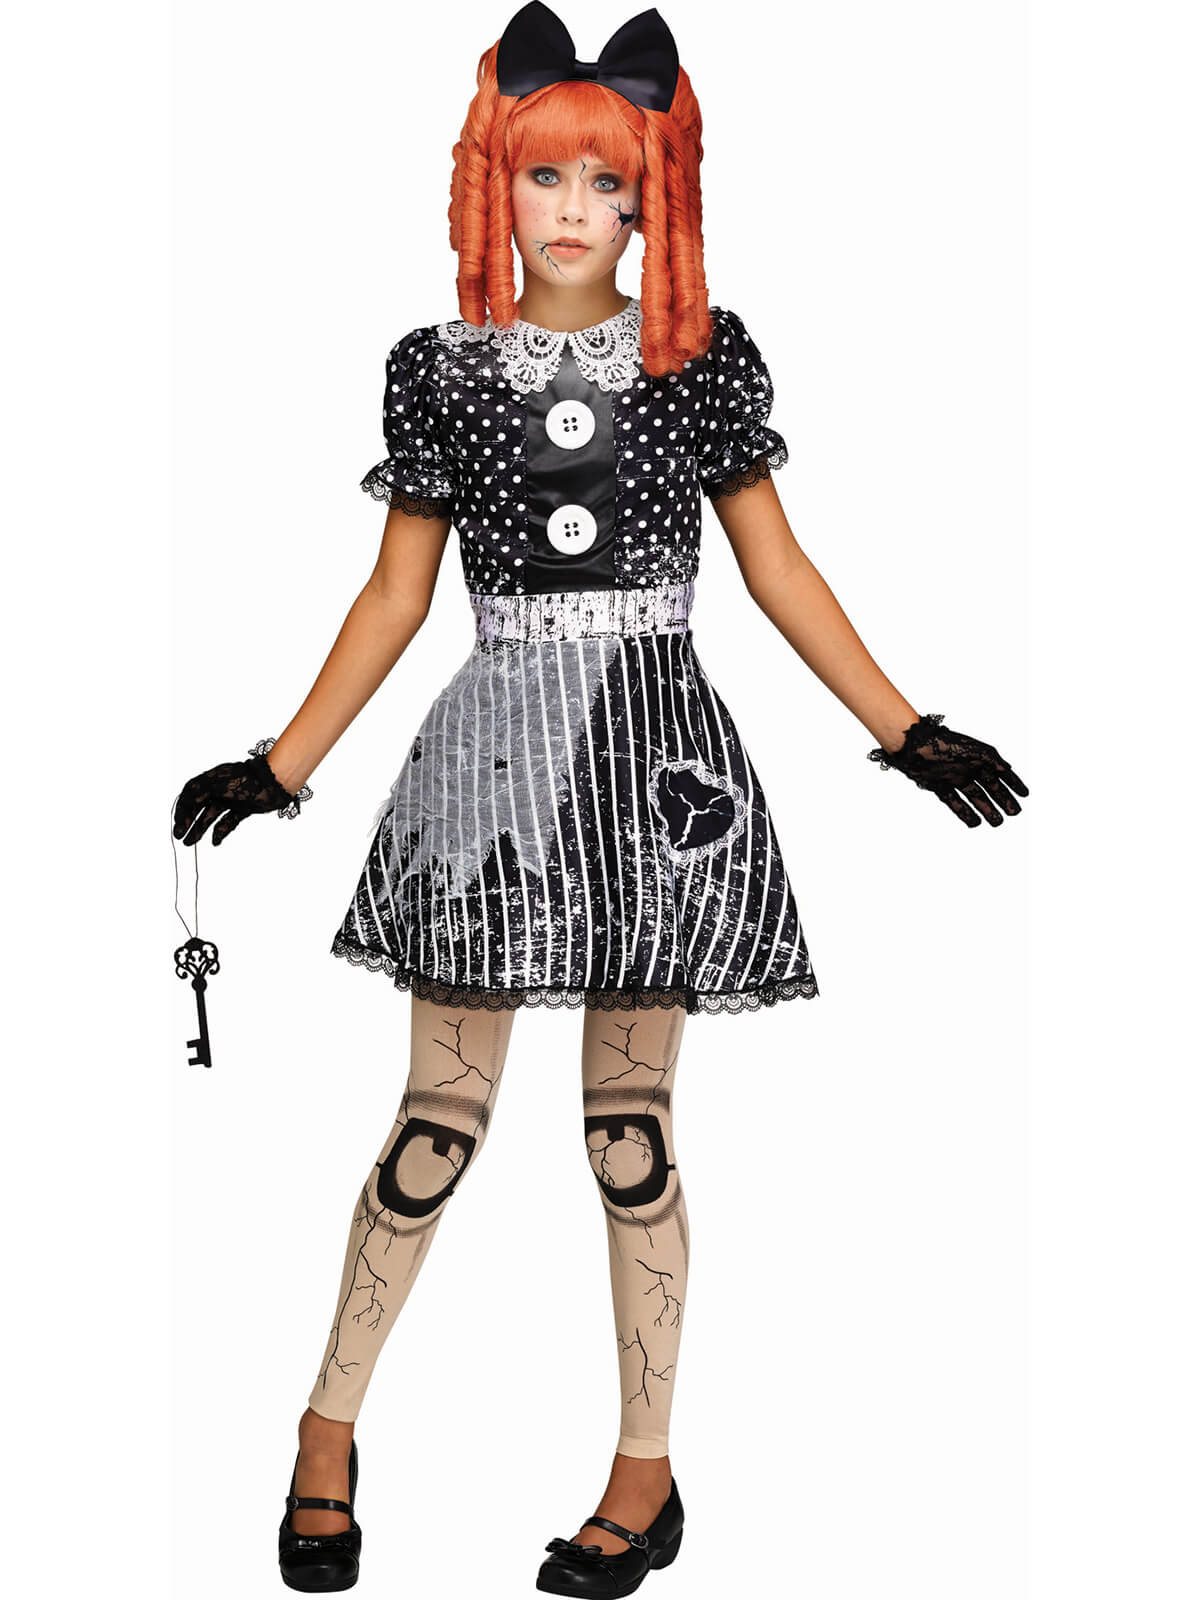 Attic Doll Child HalloweenCostume